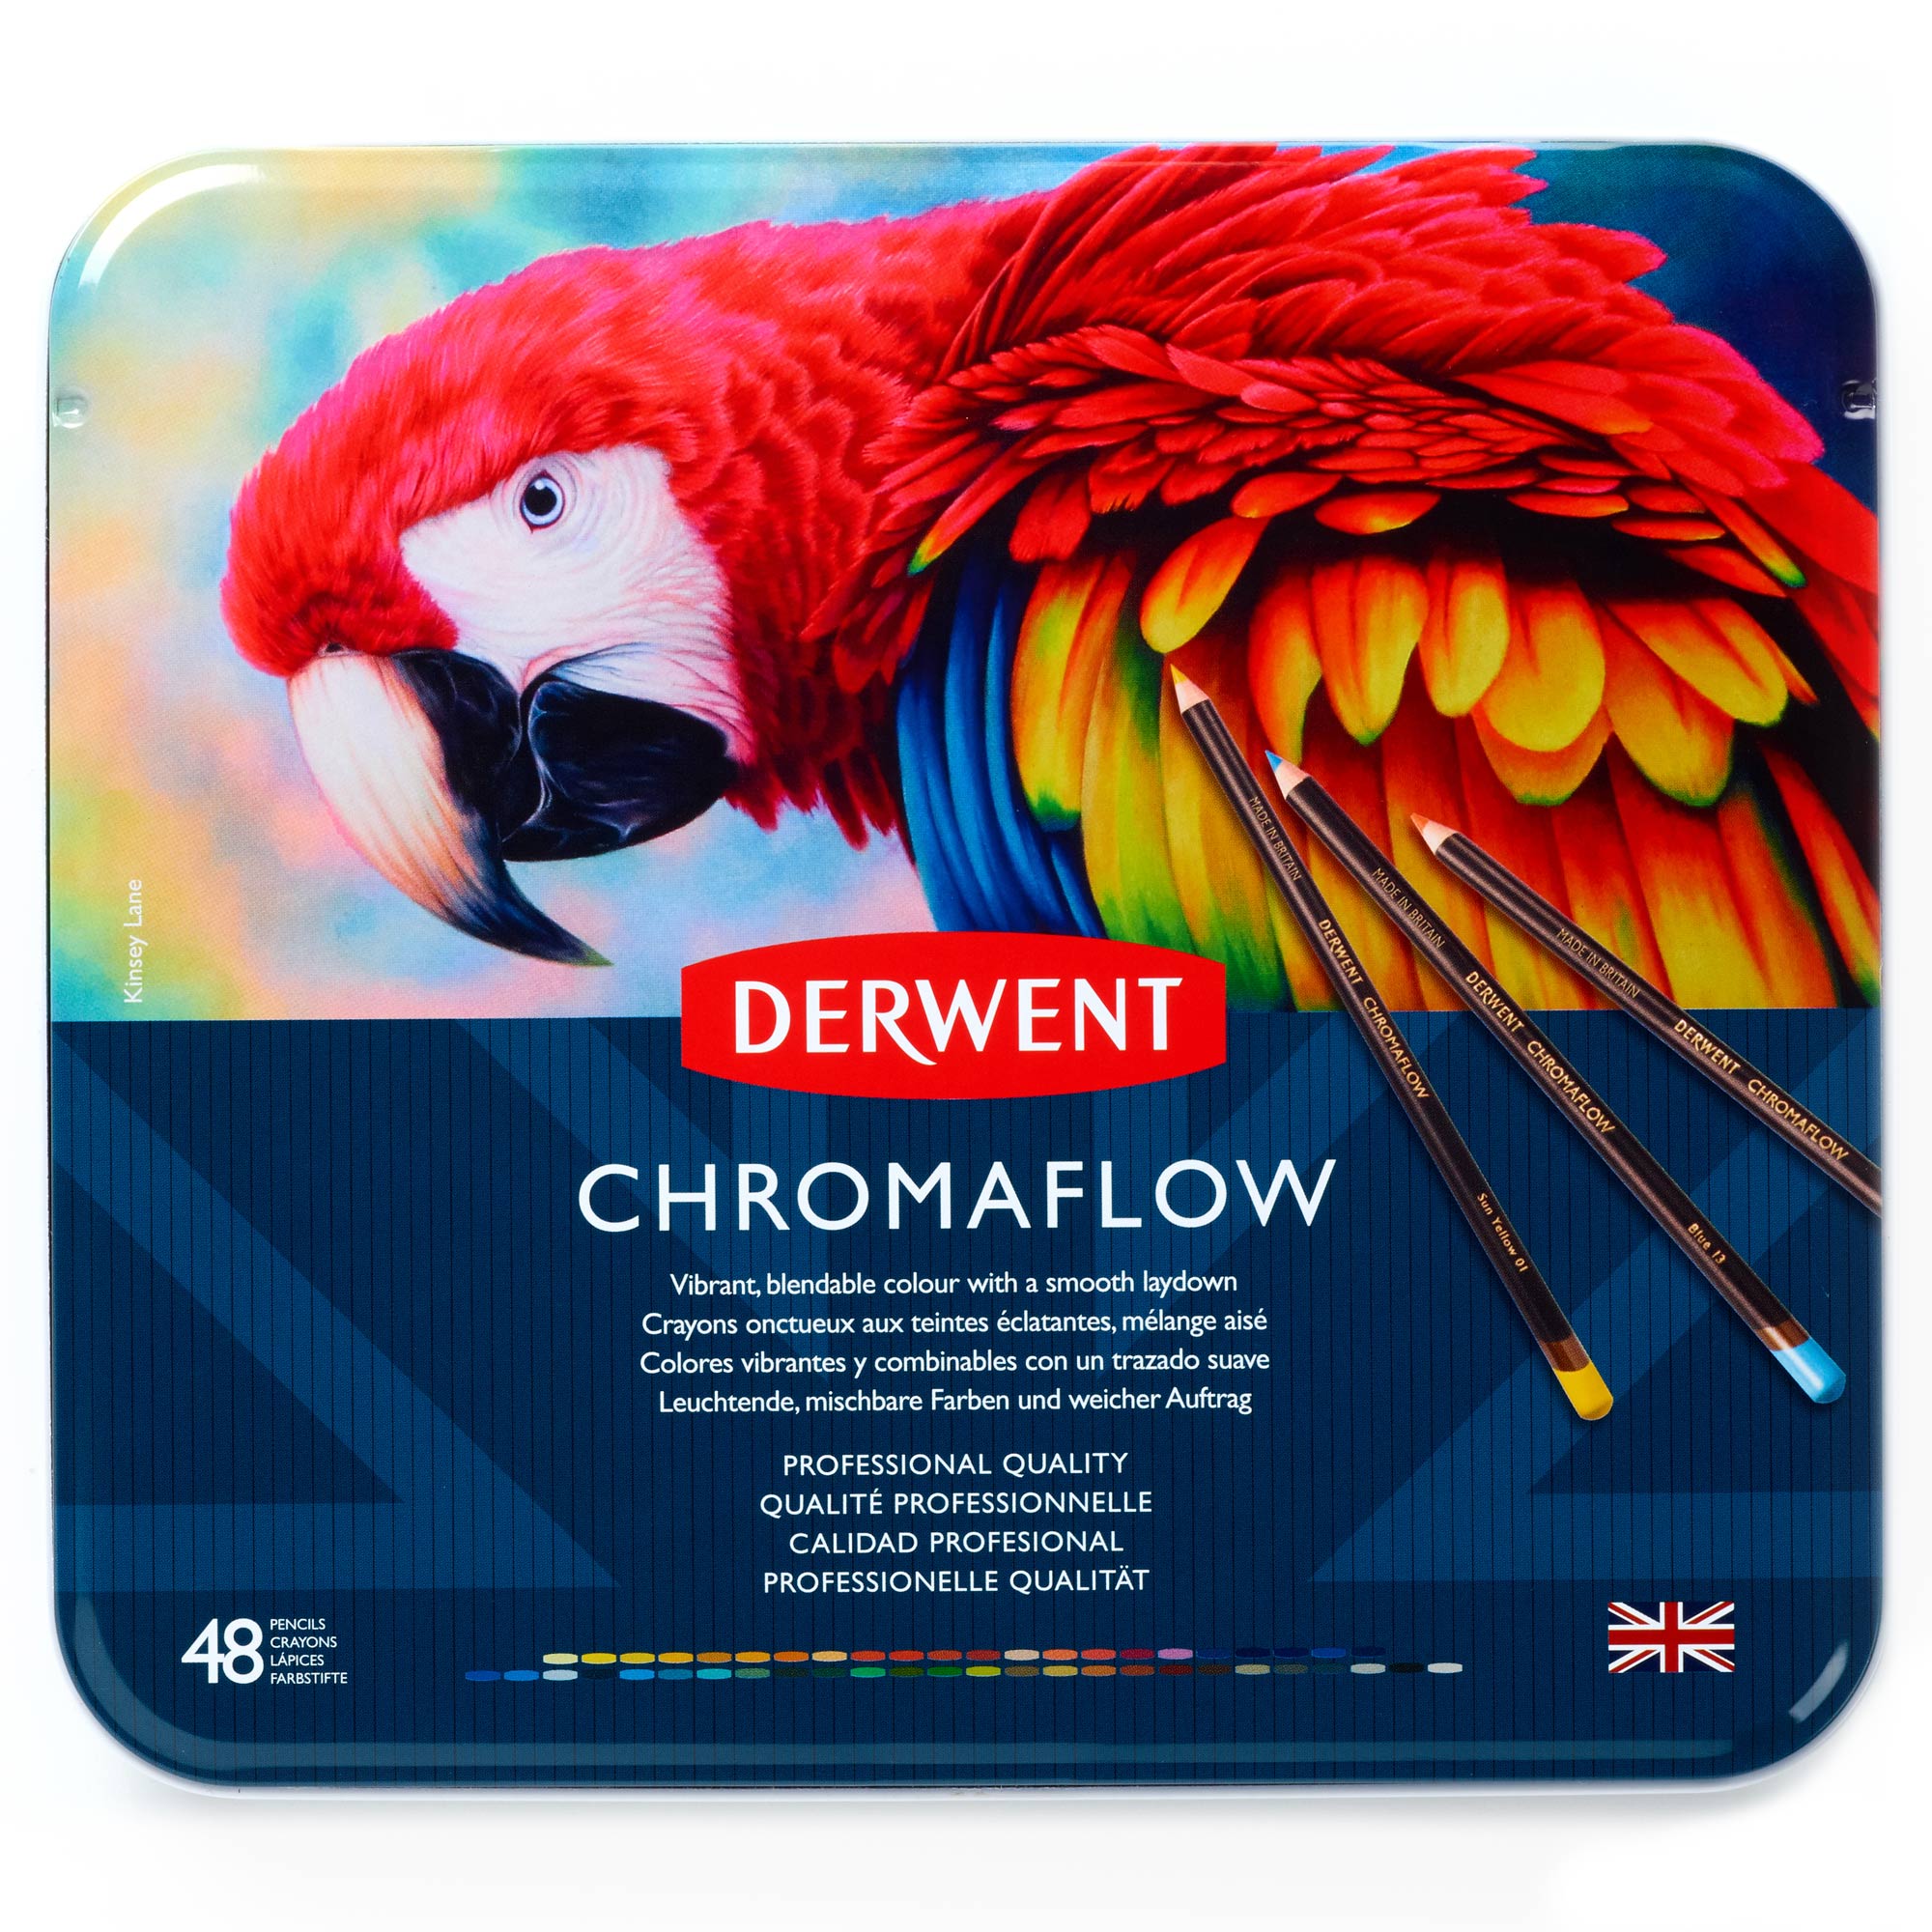 Derwent Chromaflow Pencils - Set of 48 - FREE Set of 2 Blender Pens